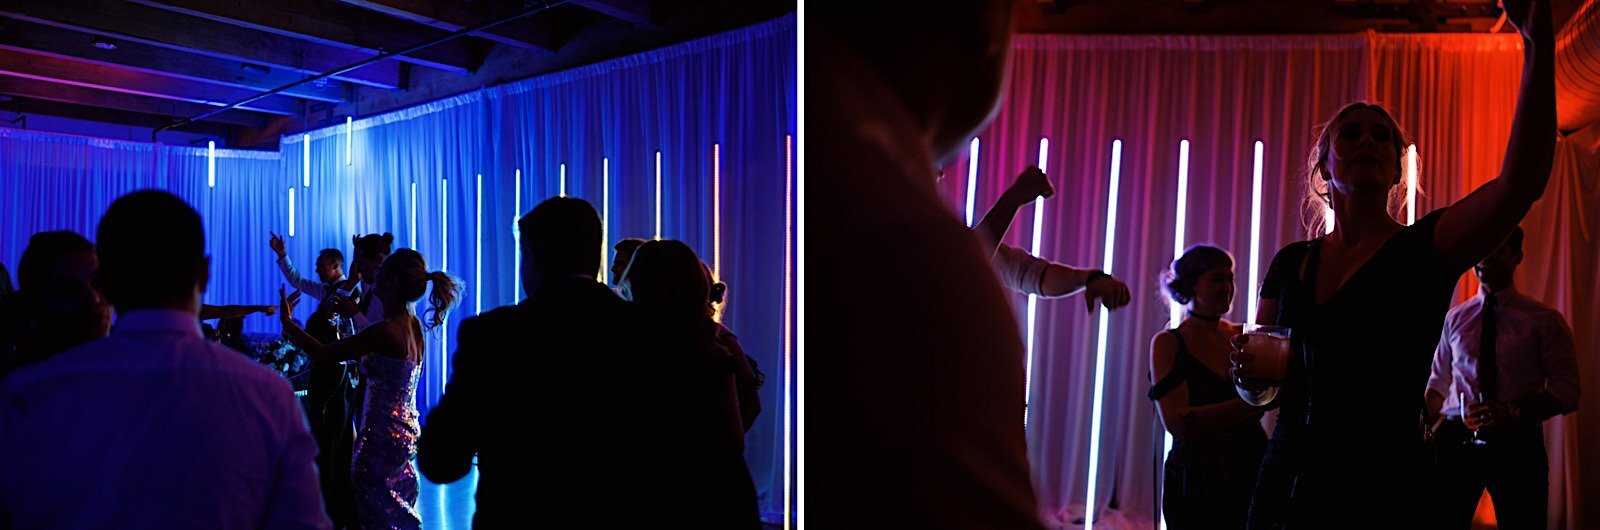 70_flynn_seattle_stick_pixel_Rainbow_Wedding_at_lighting_by_Ryan.jpg